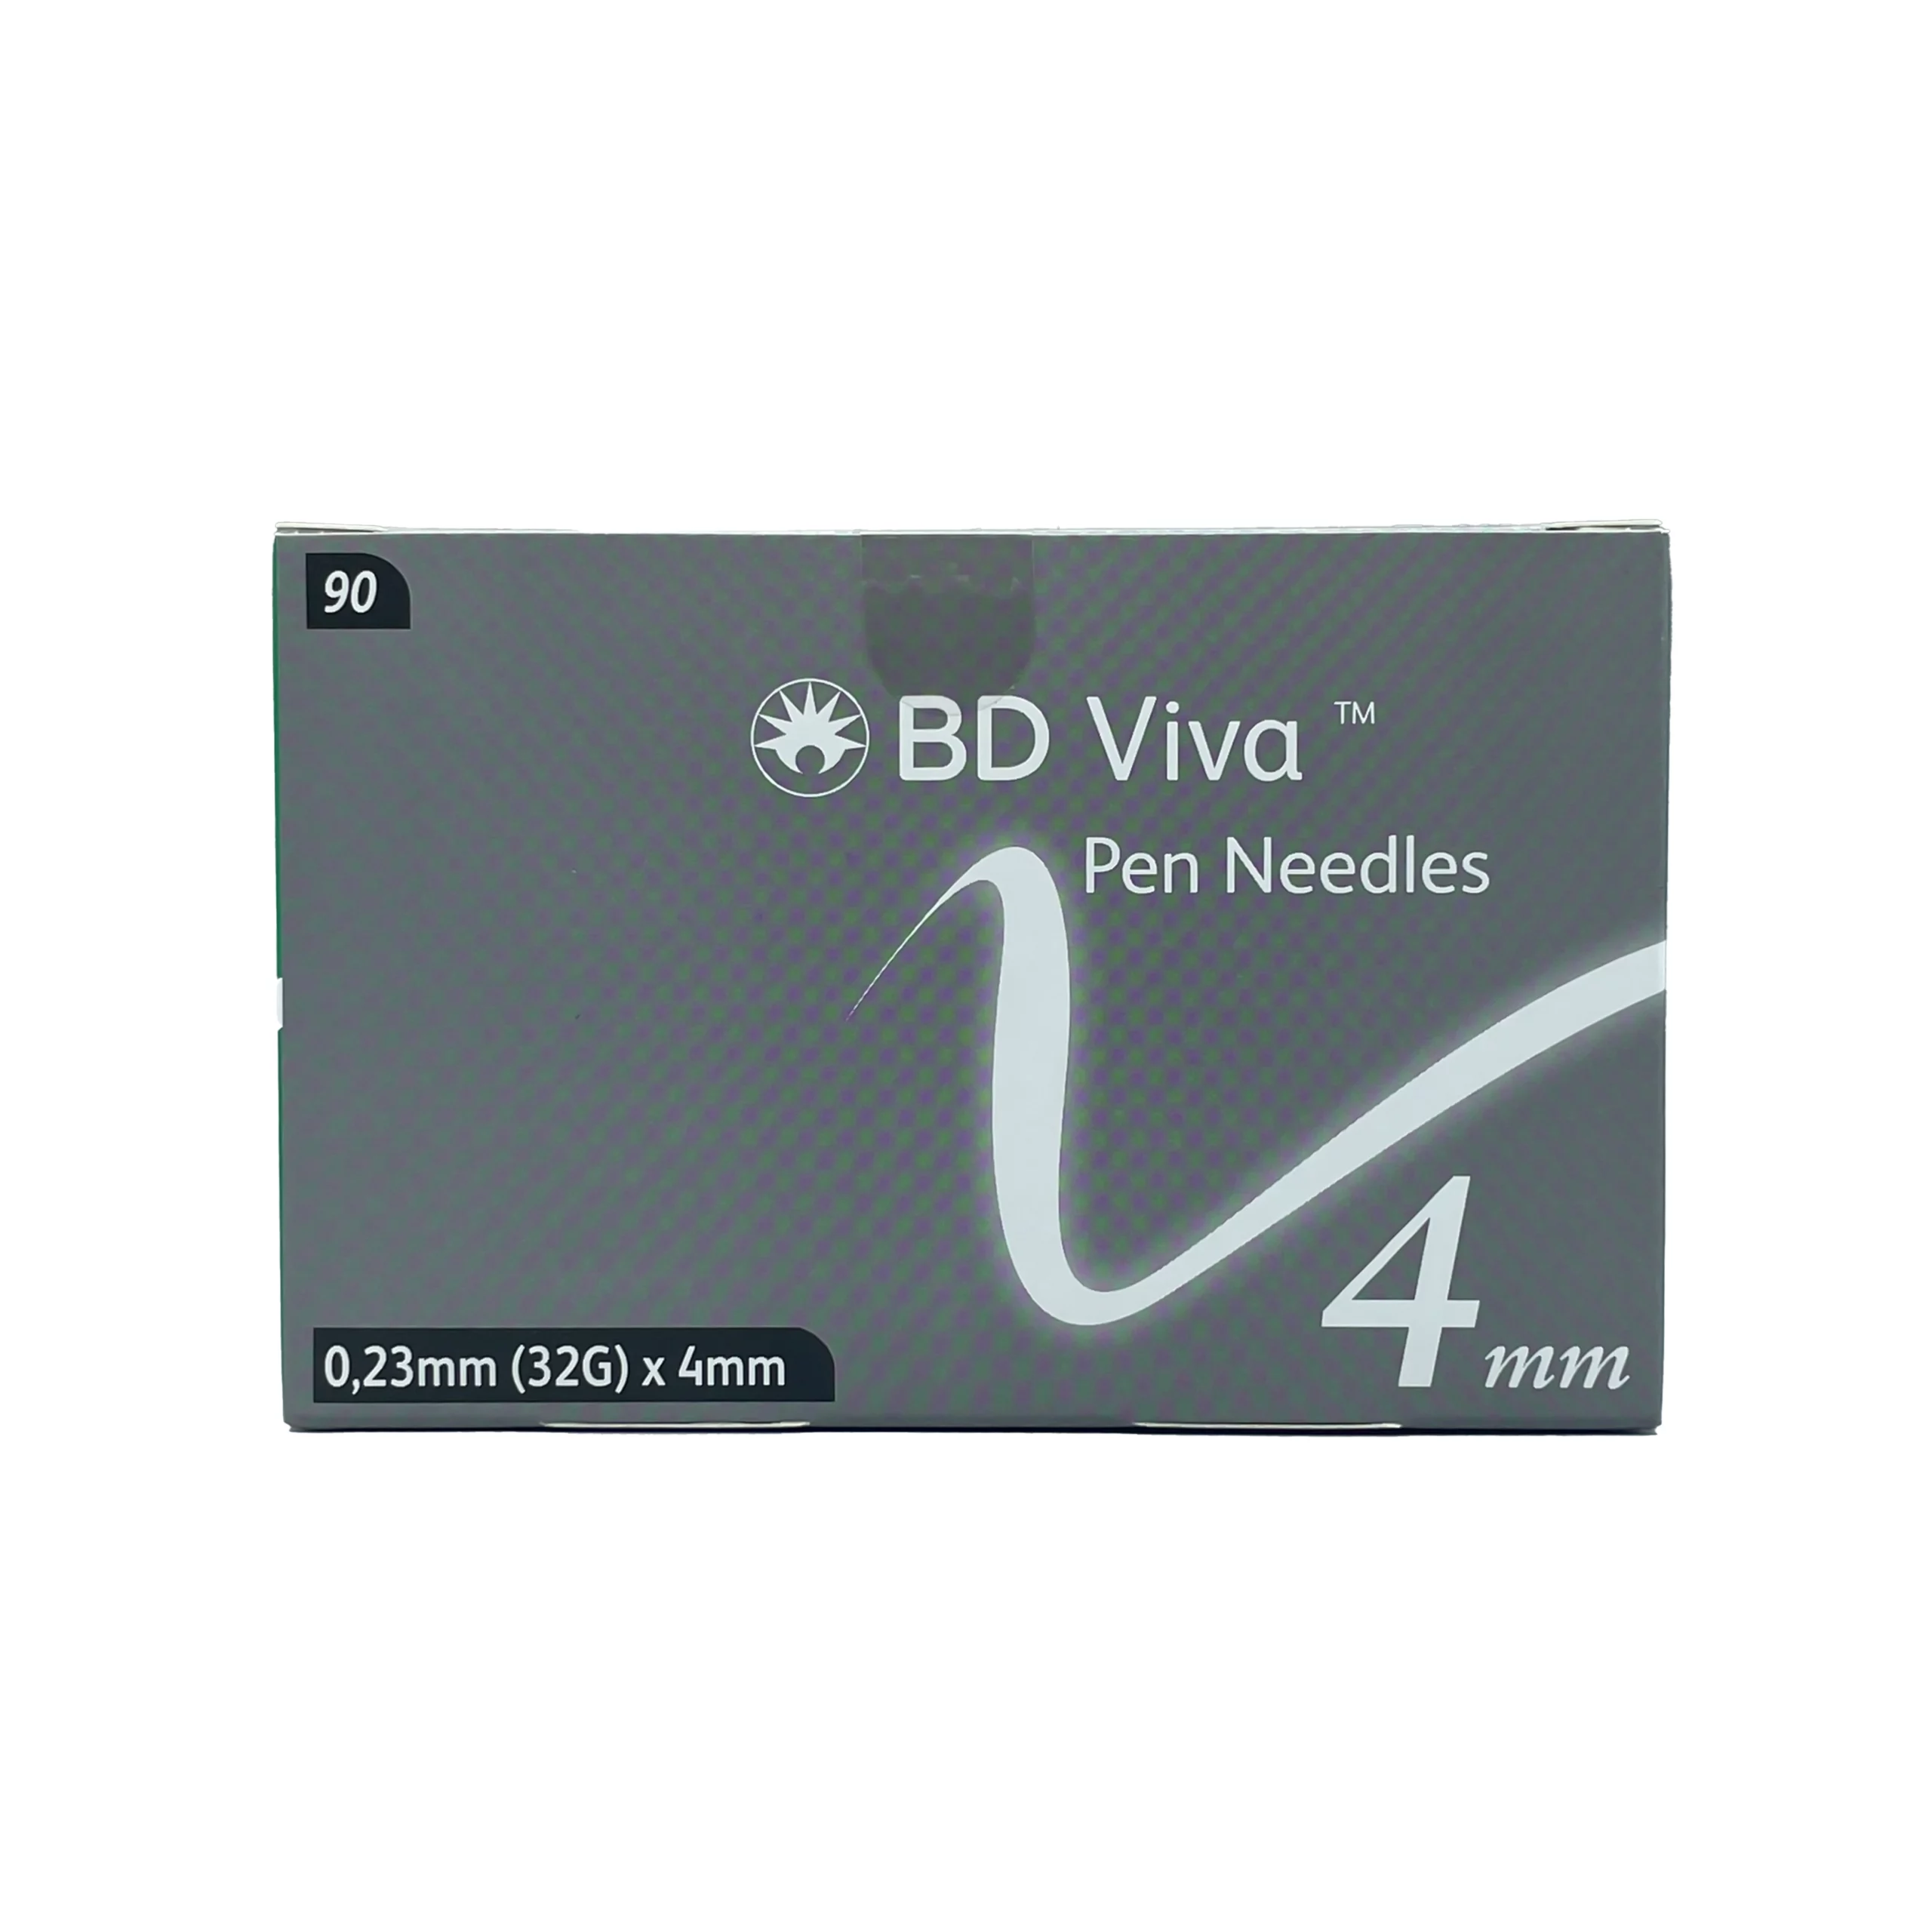 BD Viva 4mm Pen Needles (30)